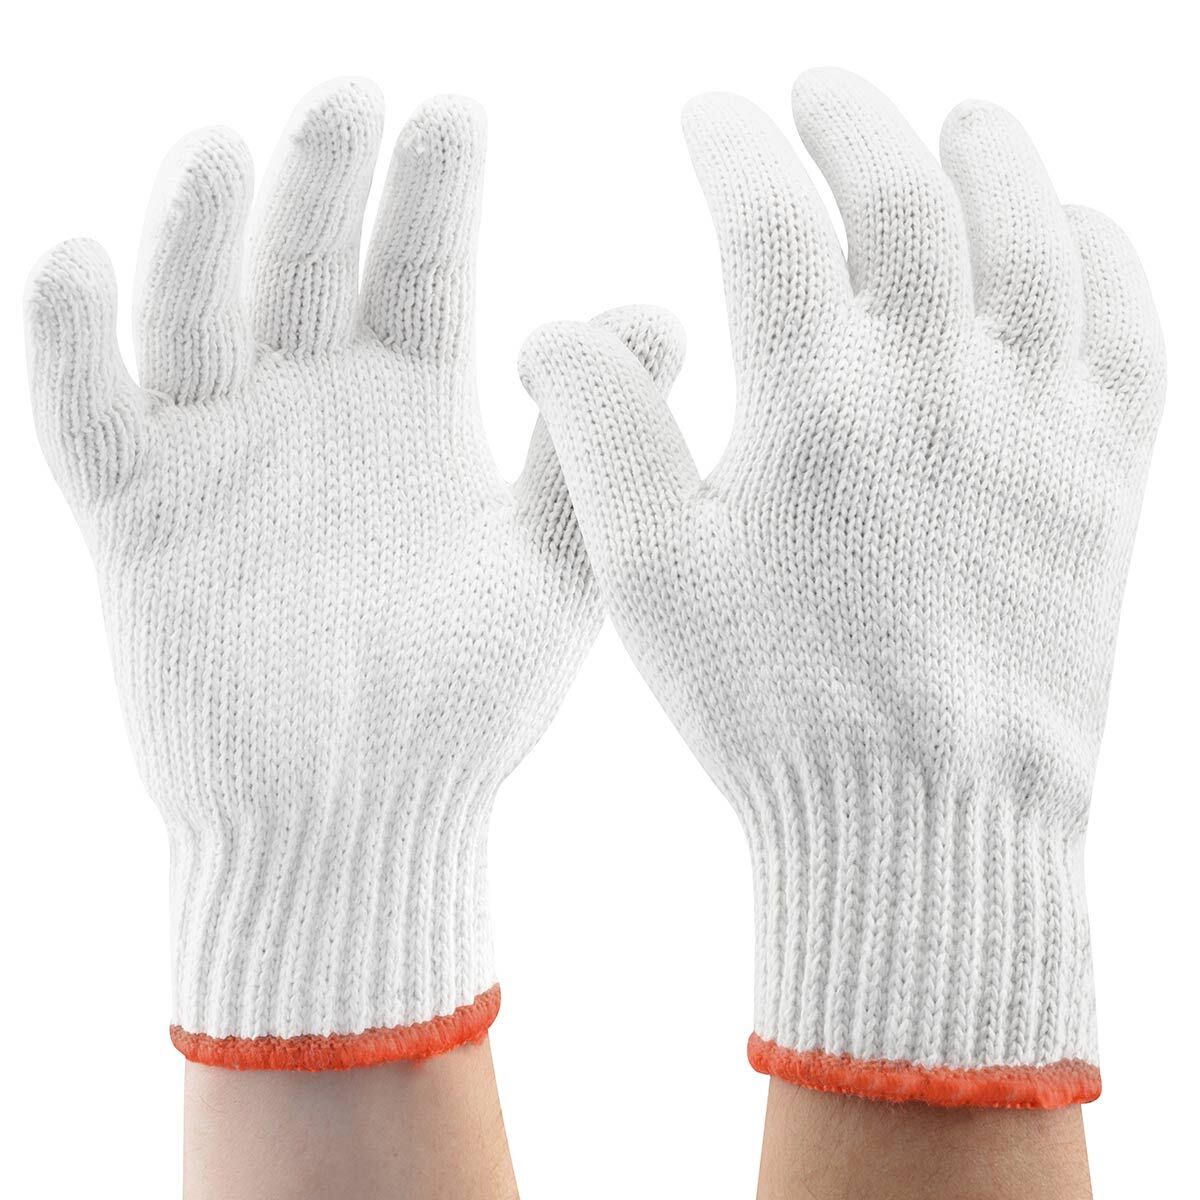 Safex Poly Cotton Gloves - White